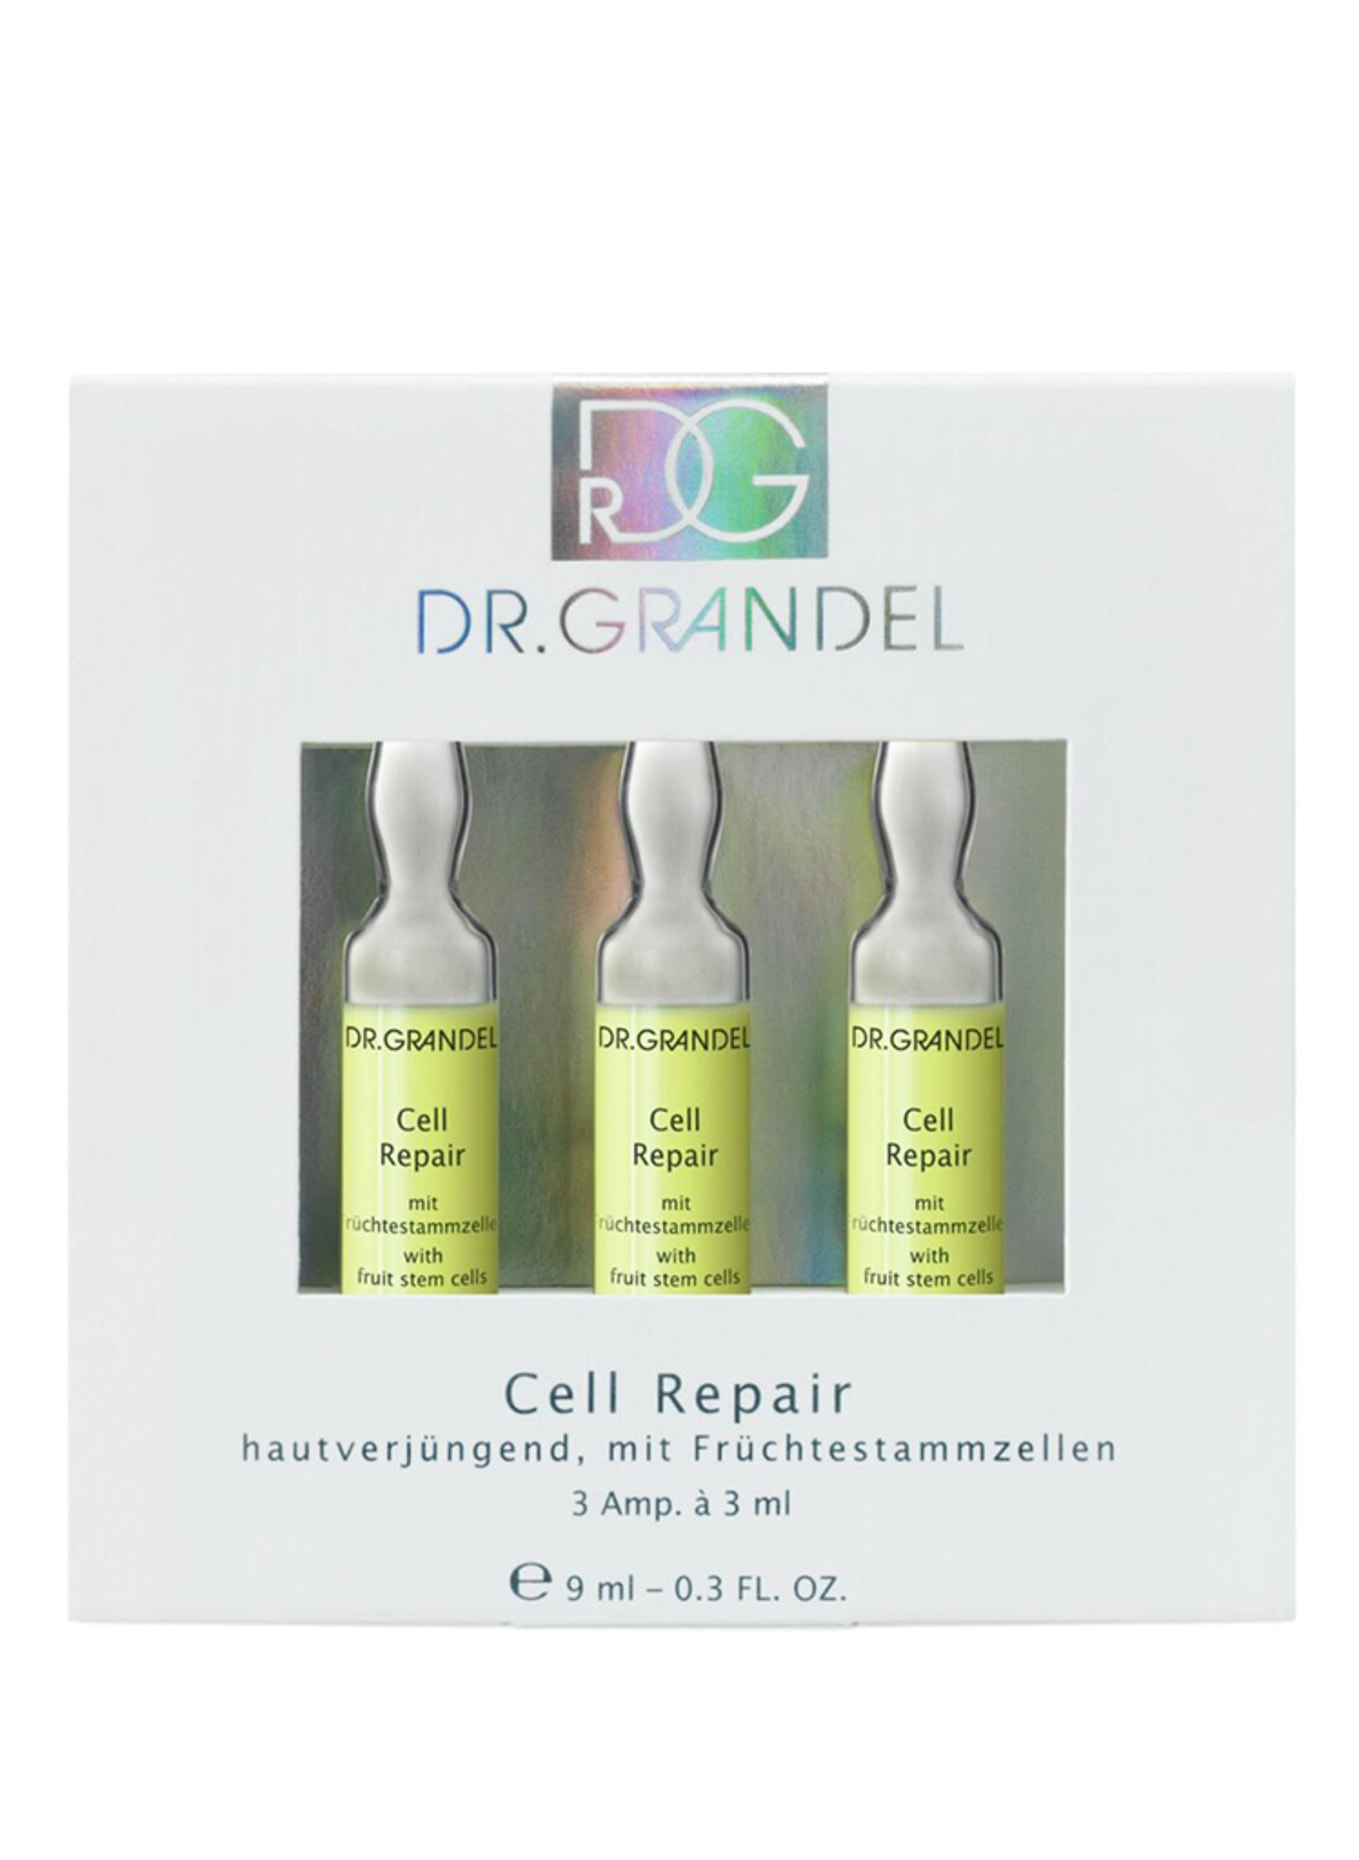 DR. GRANDEL AMPOULES - CELL REPAIR (Bild 1)